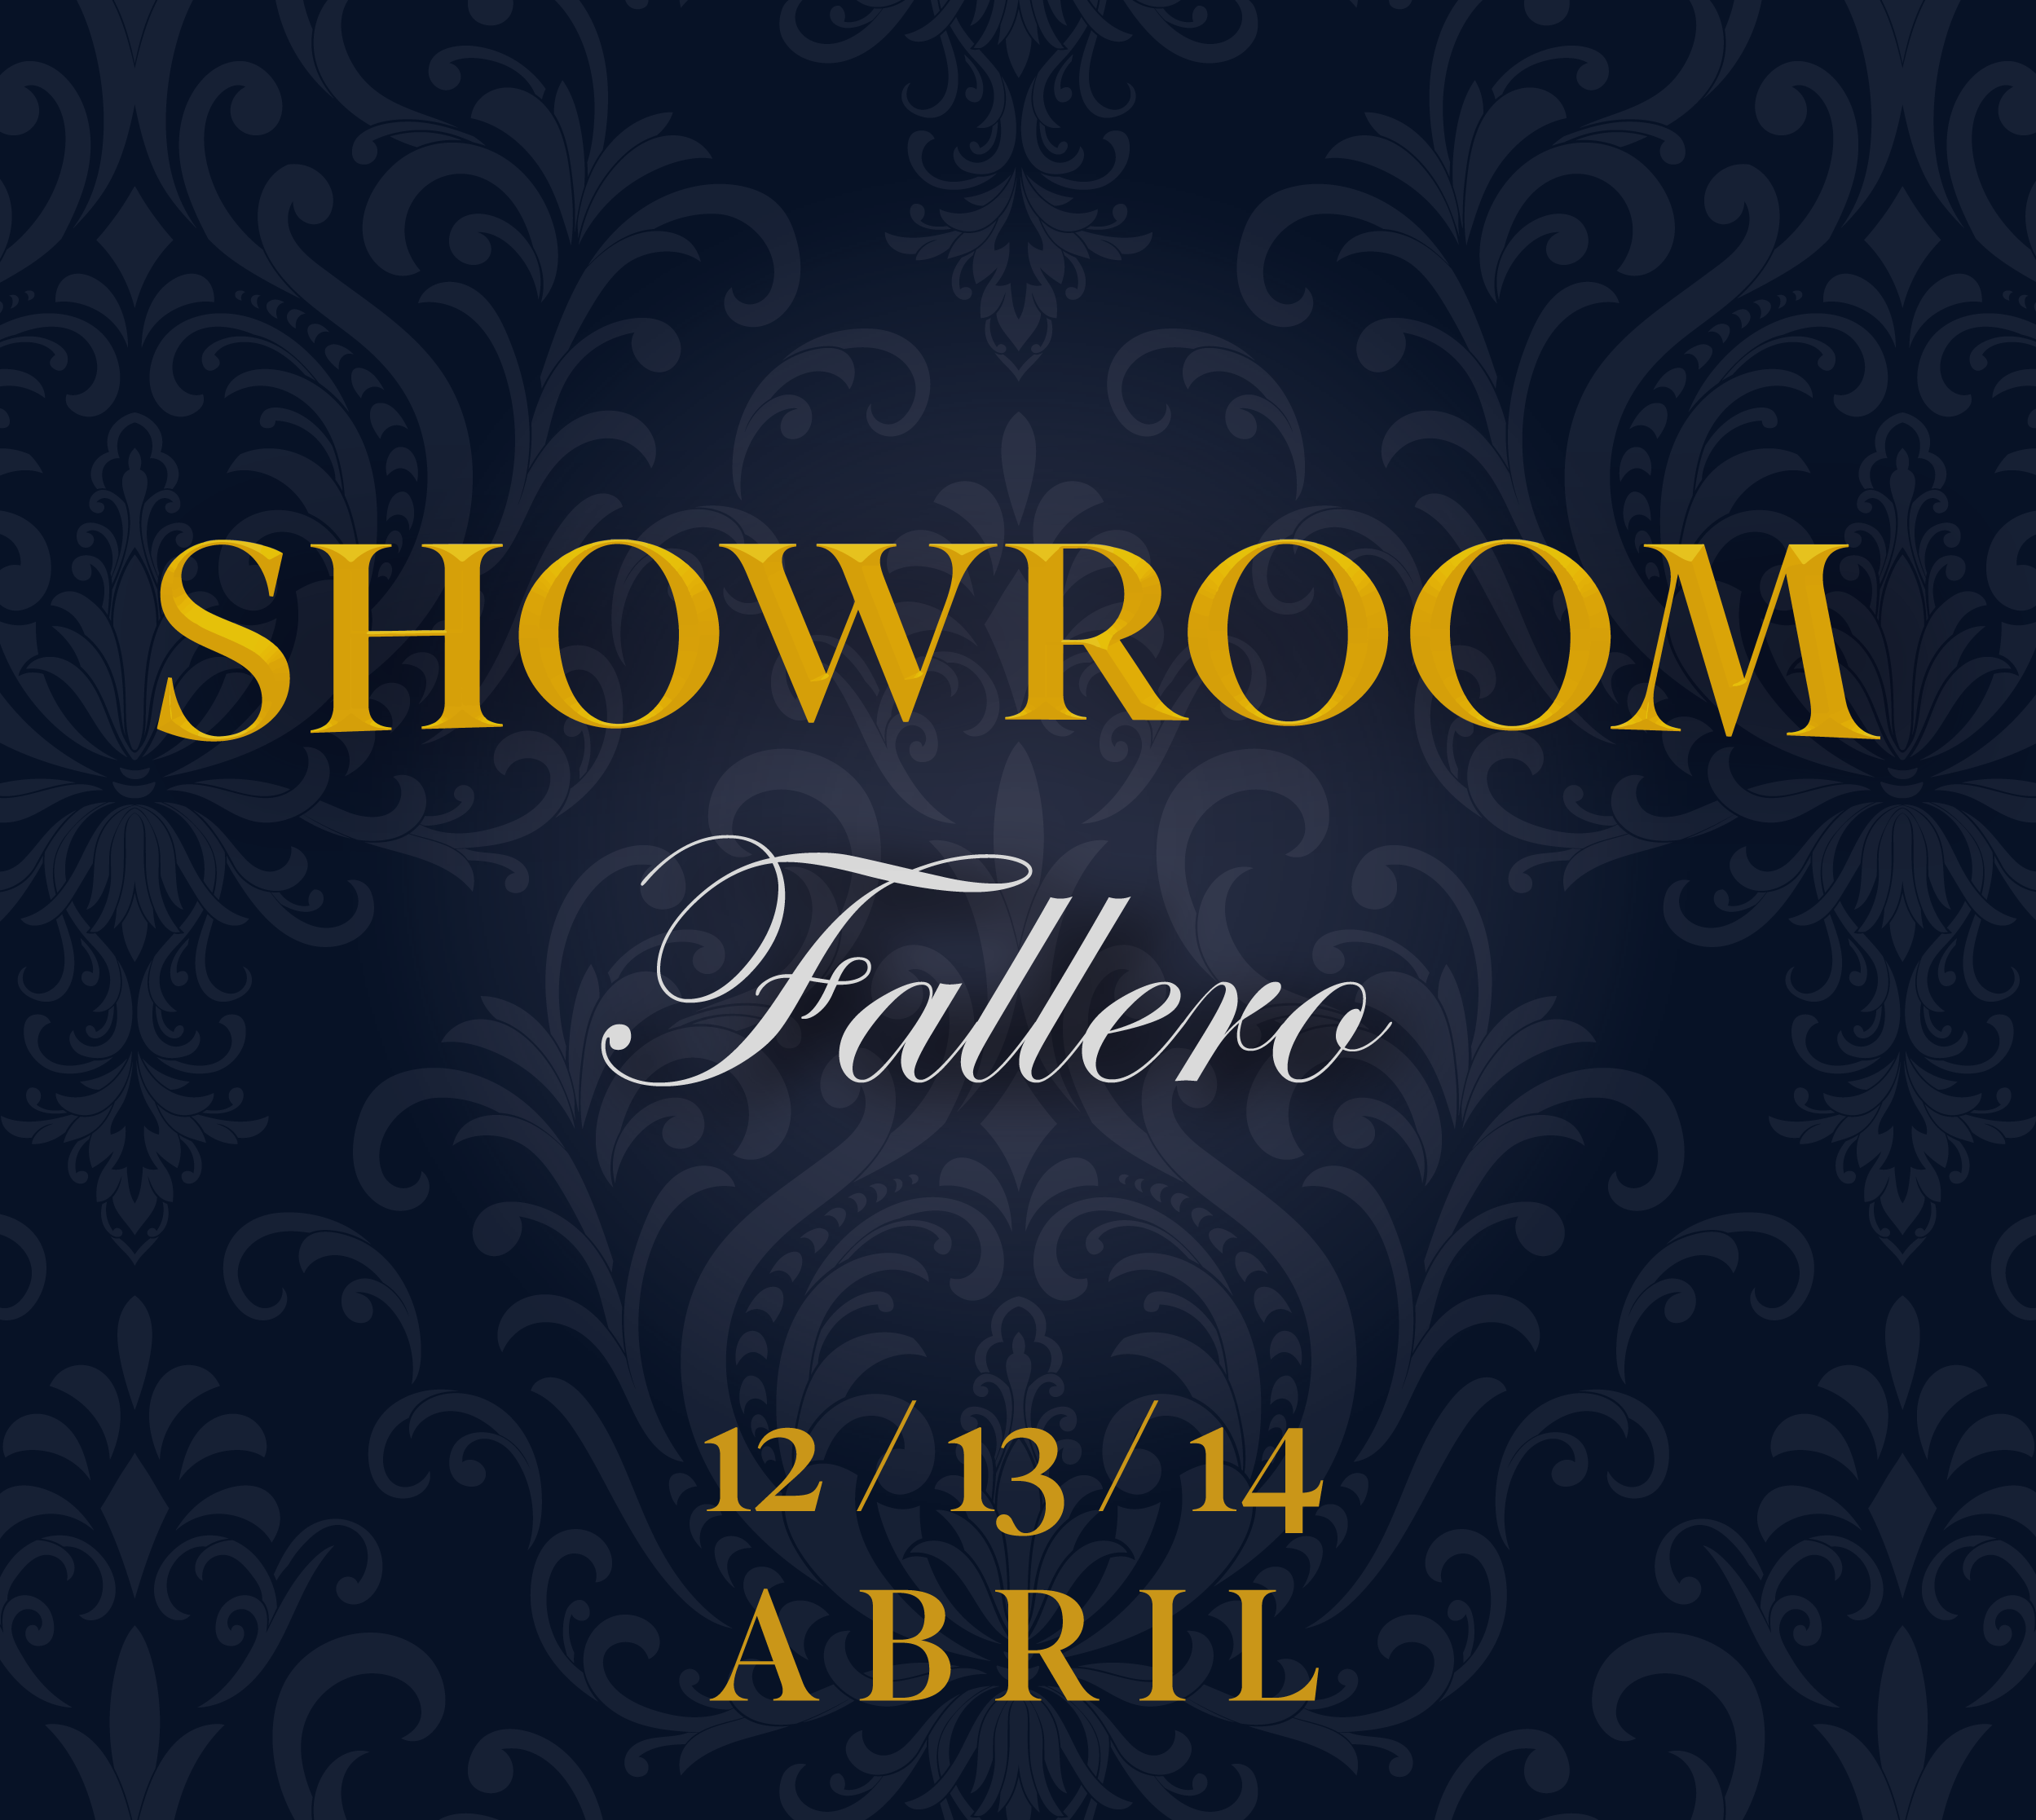 Showroom Fallero